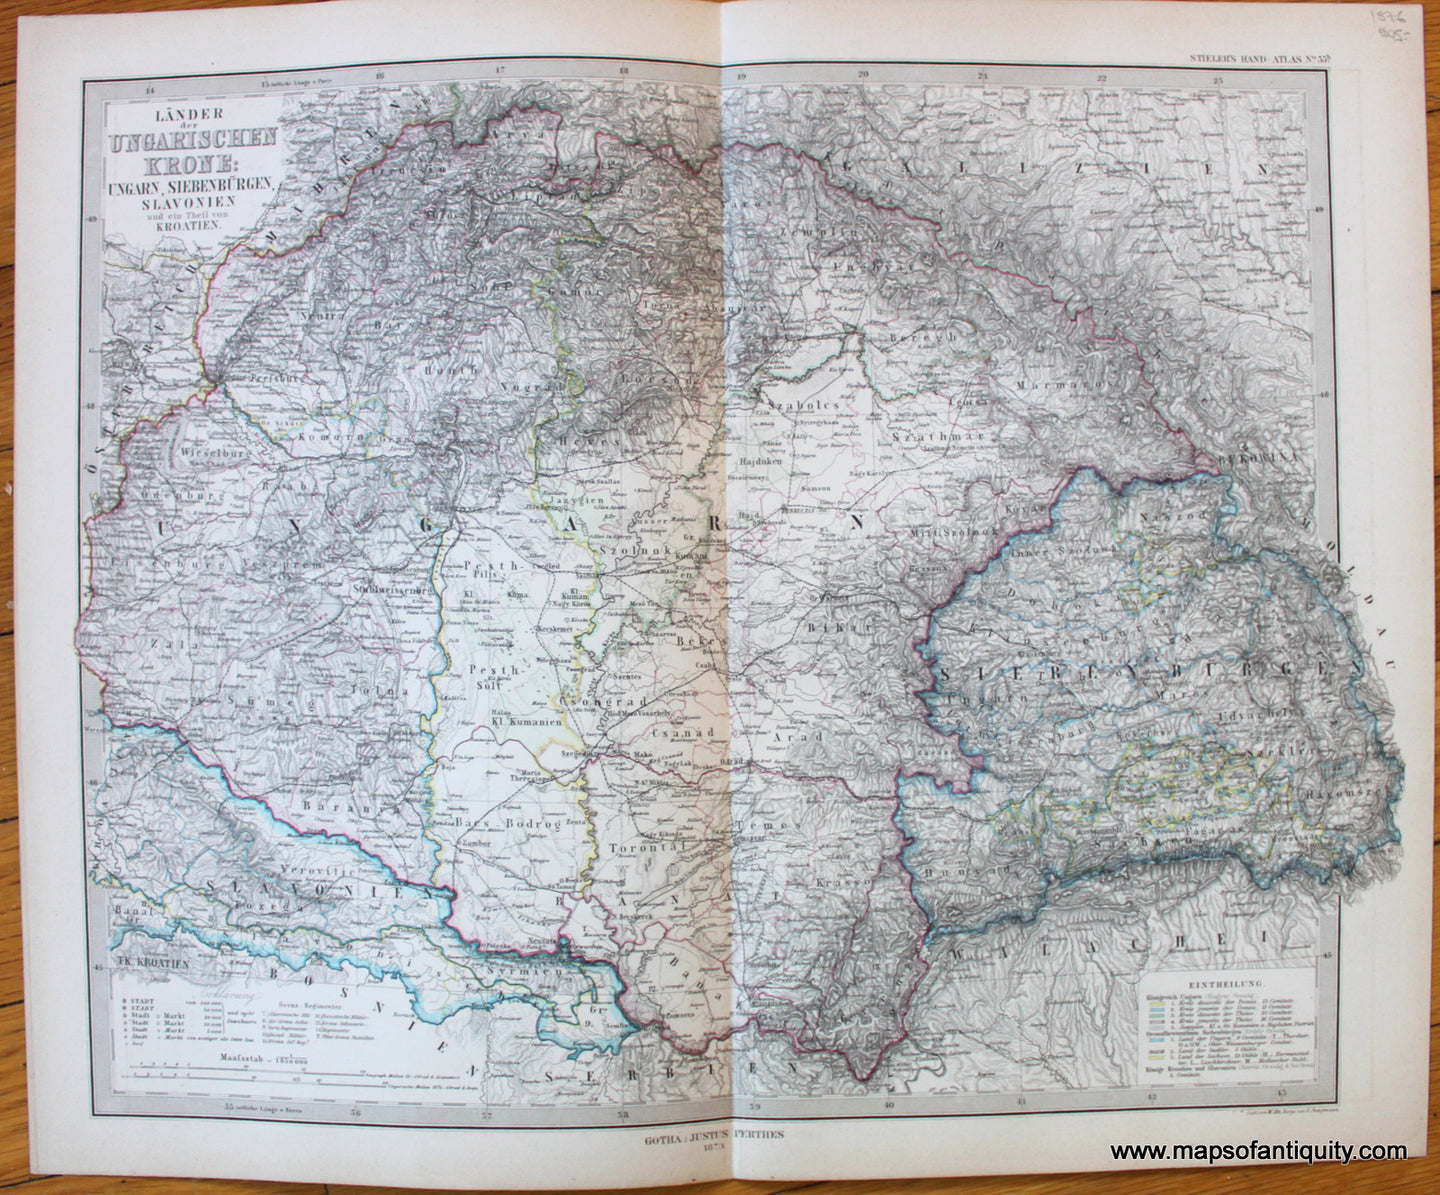 Antique-Map-Europe-Ungarischen-Krone-Hungary-Slovakia-Romania-Balkans-Stieler-1876-1870s-1800s-19th-century-Maps-of-Antiquity